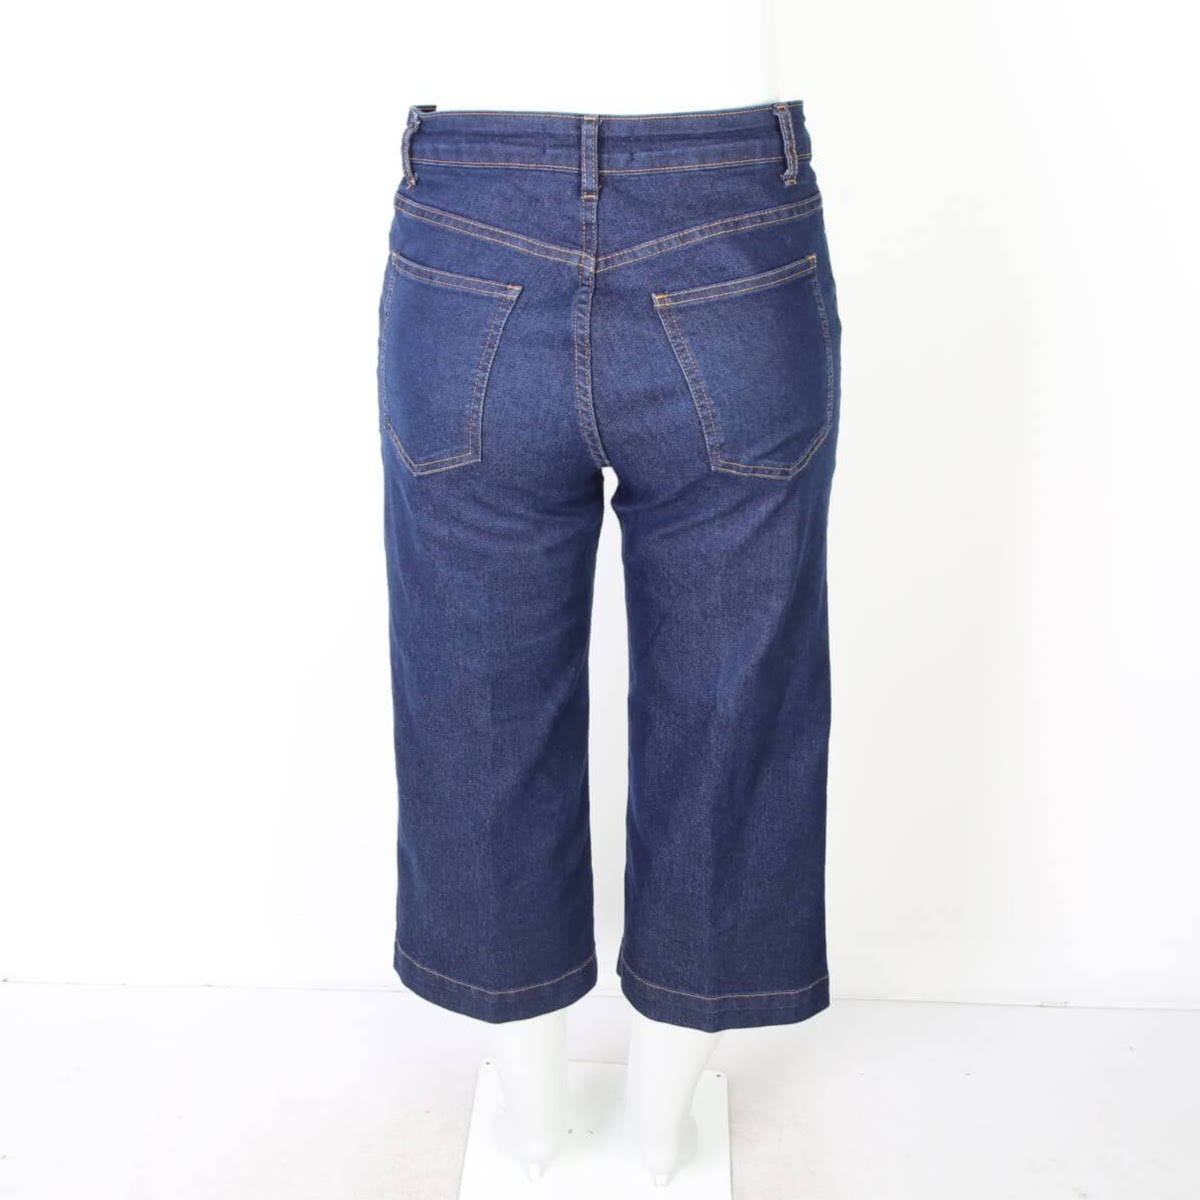 Calça Jeans - Nem - 40